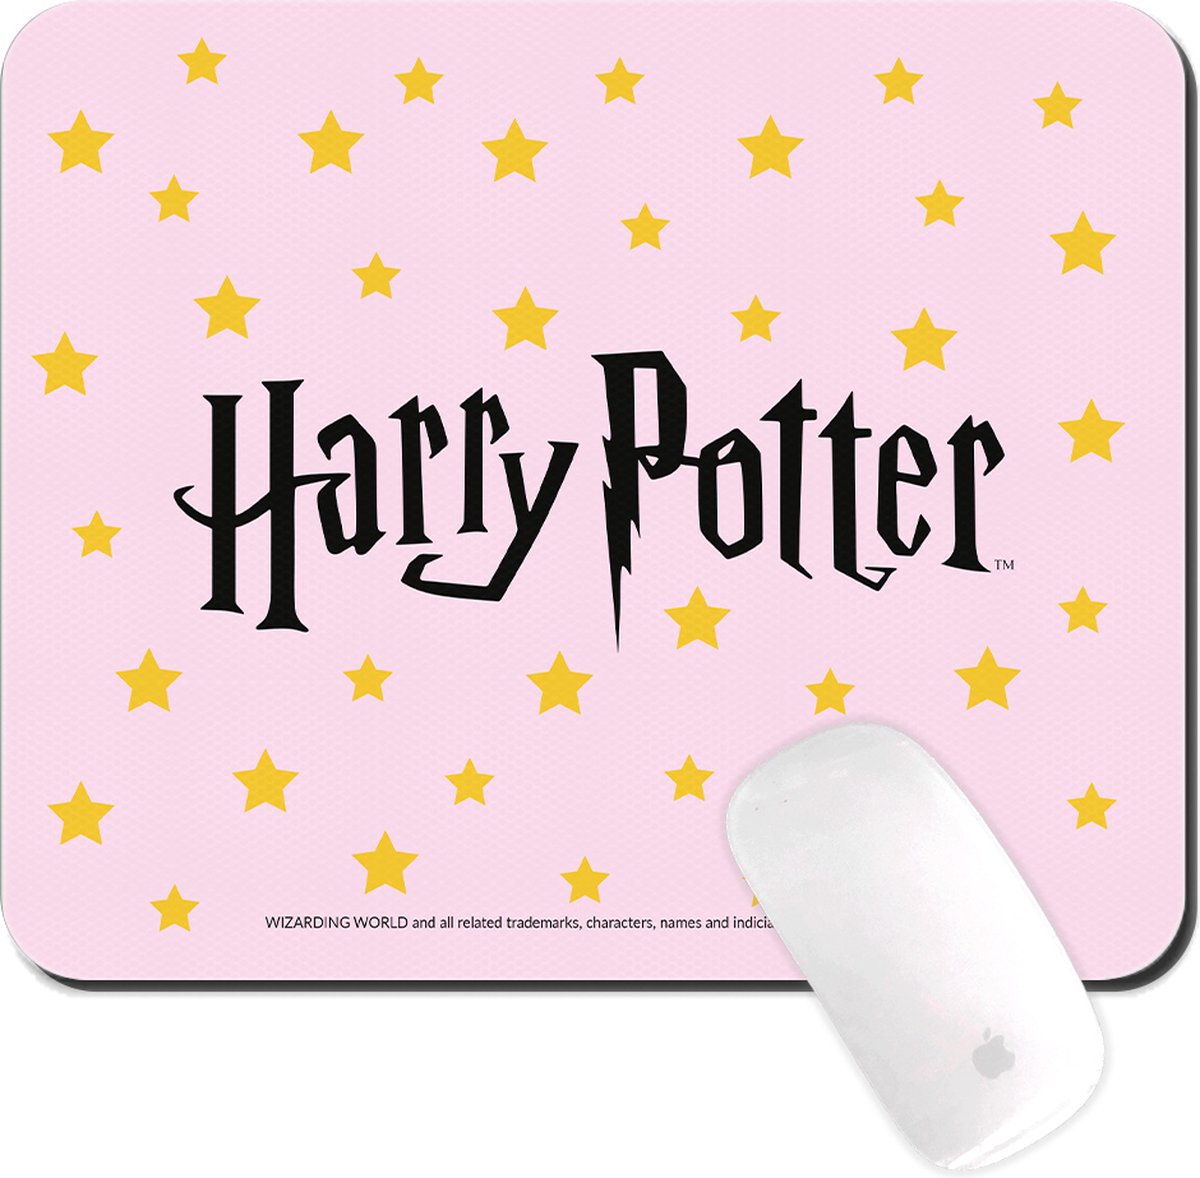 Harry Potter - Muismat 22x18cm 3mm dik